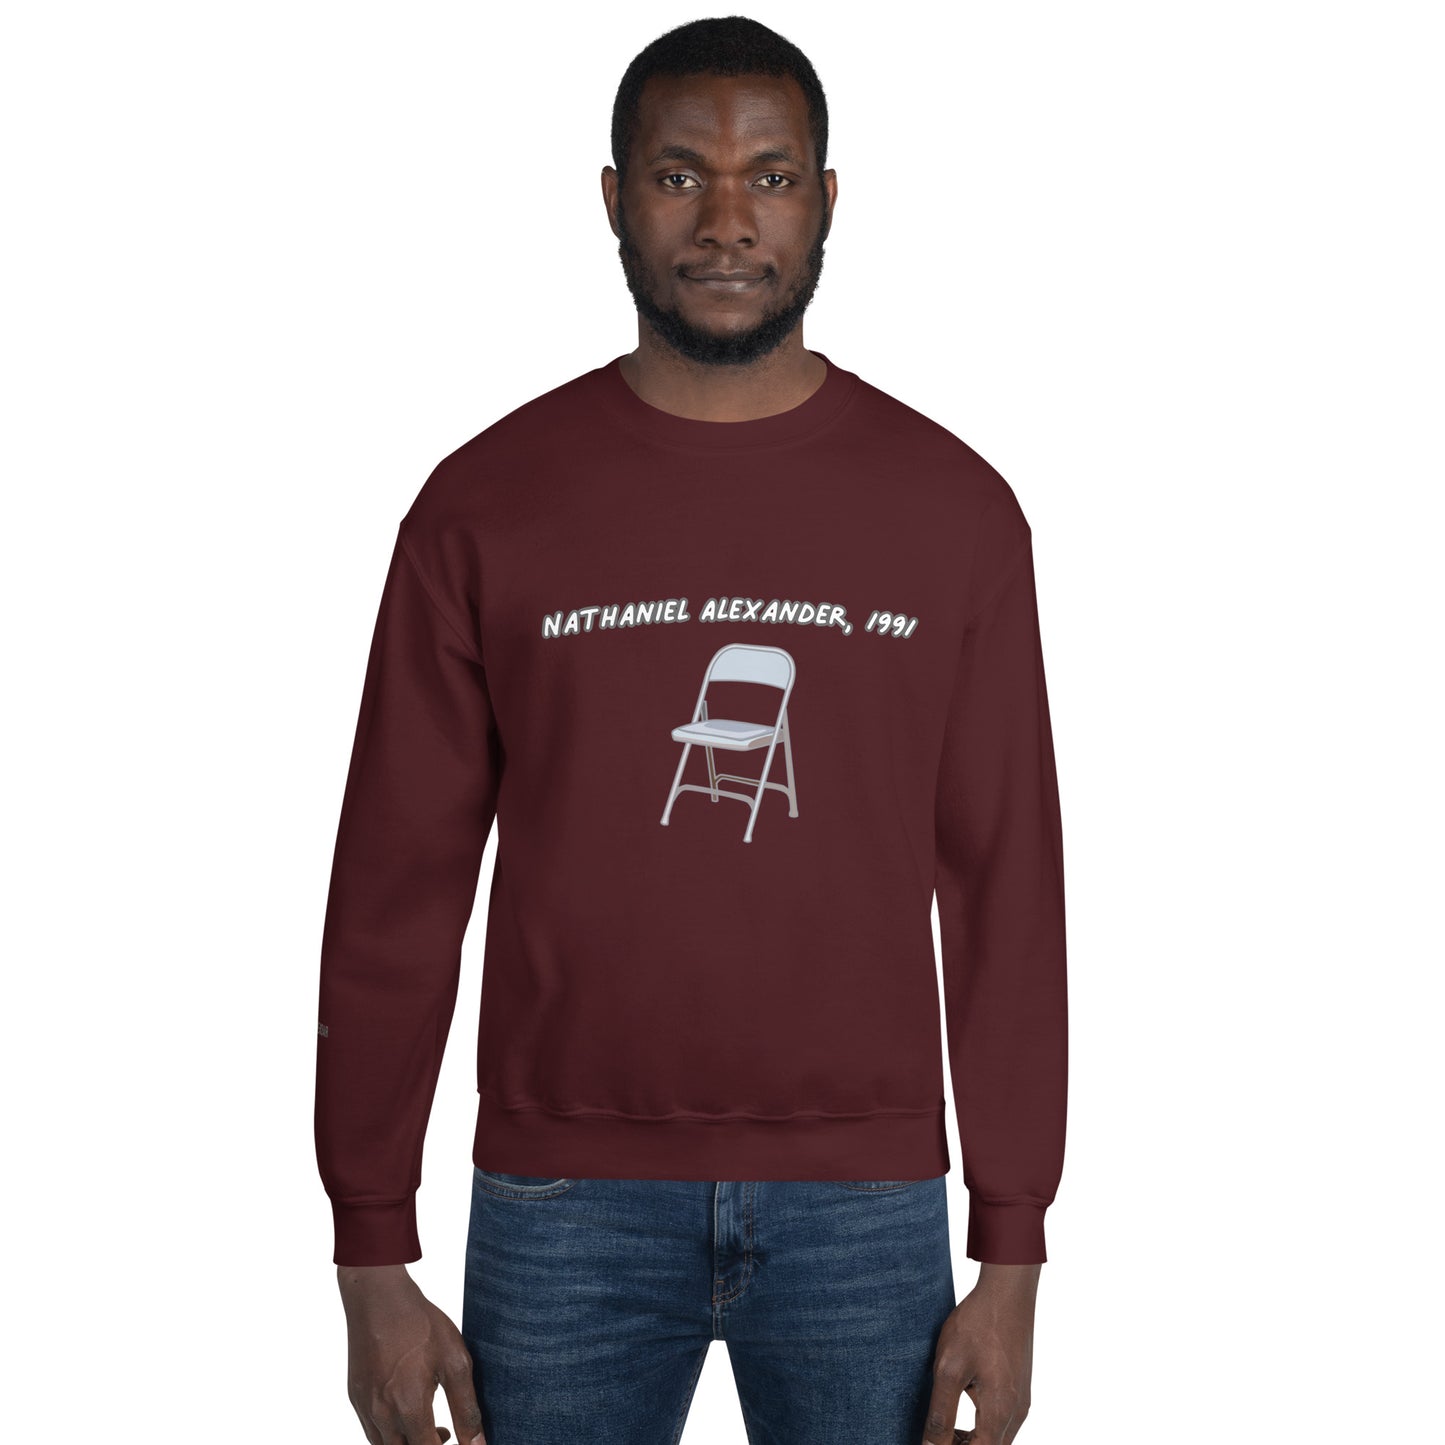 A Black Man Invented The Folding Chair / Nathaniel Alexander Unisex Sweatshirt